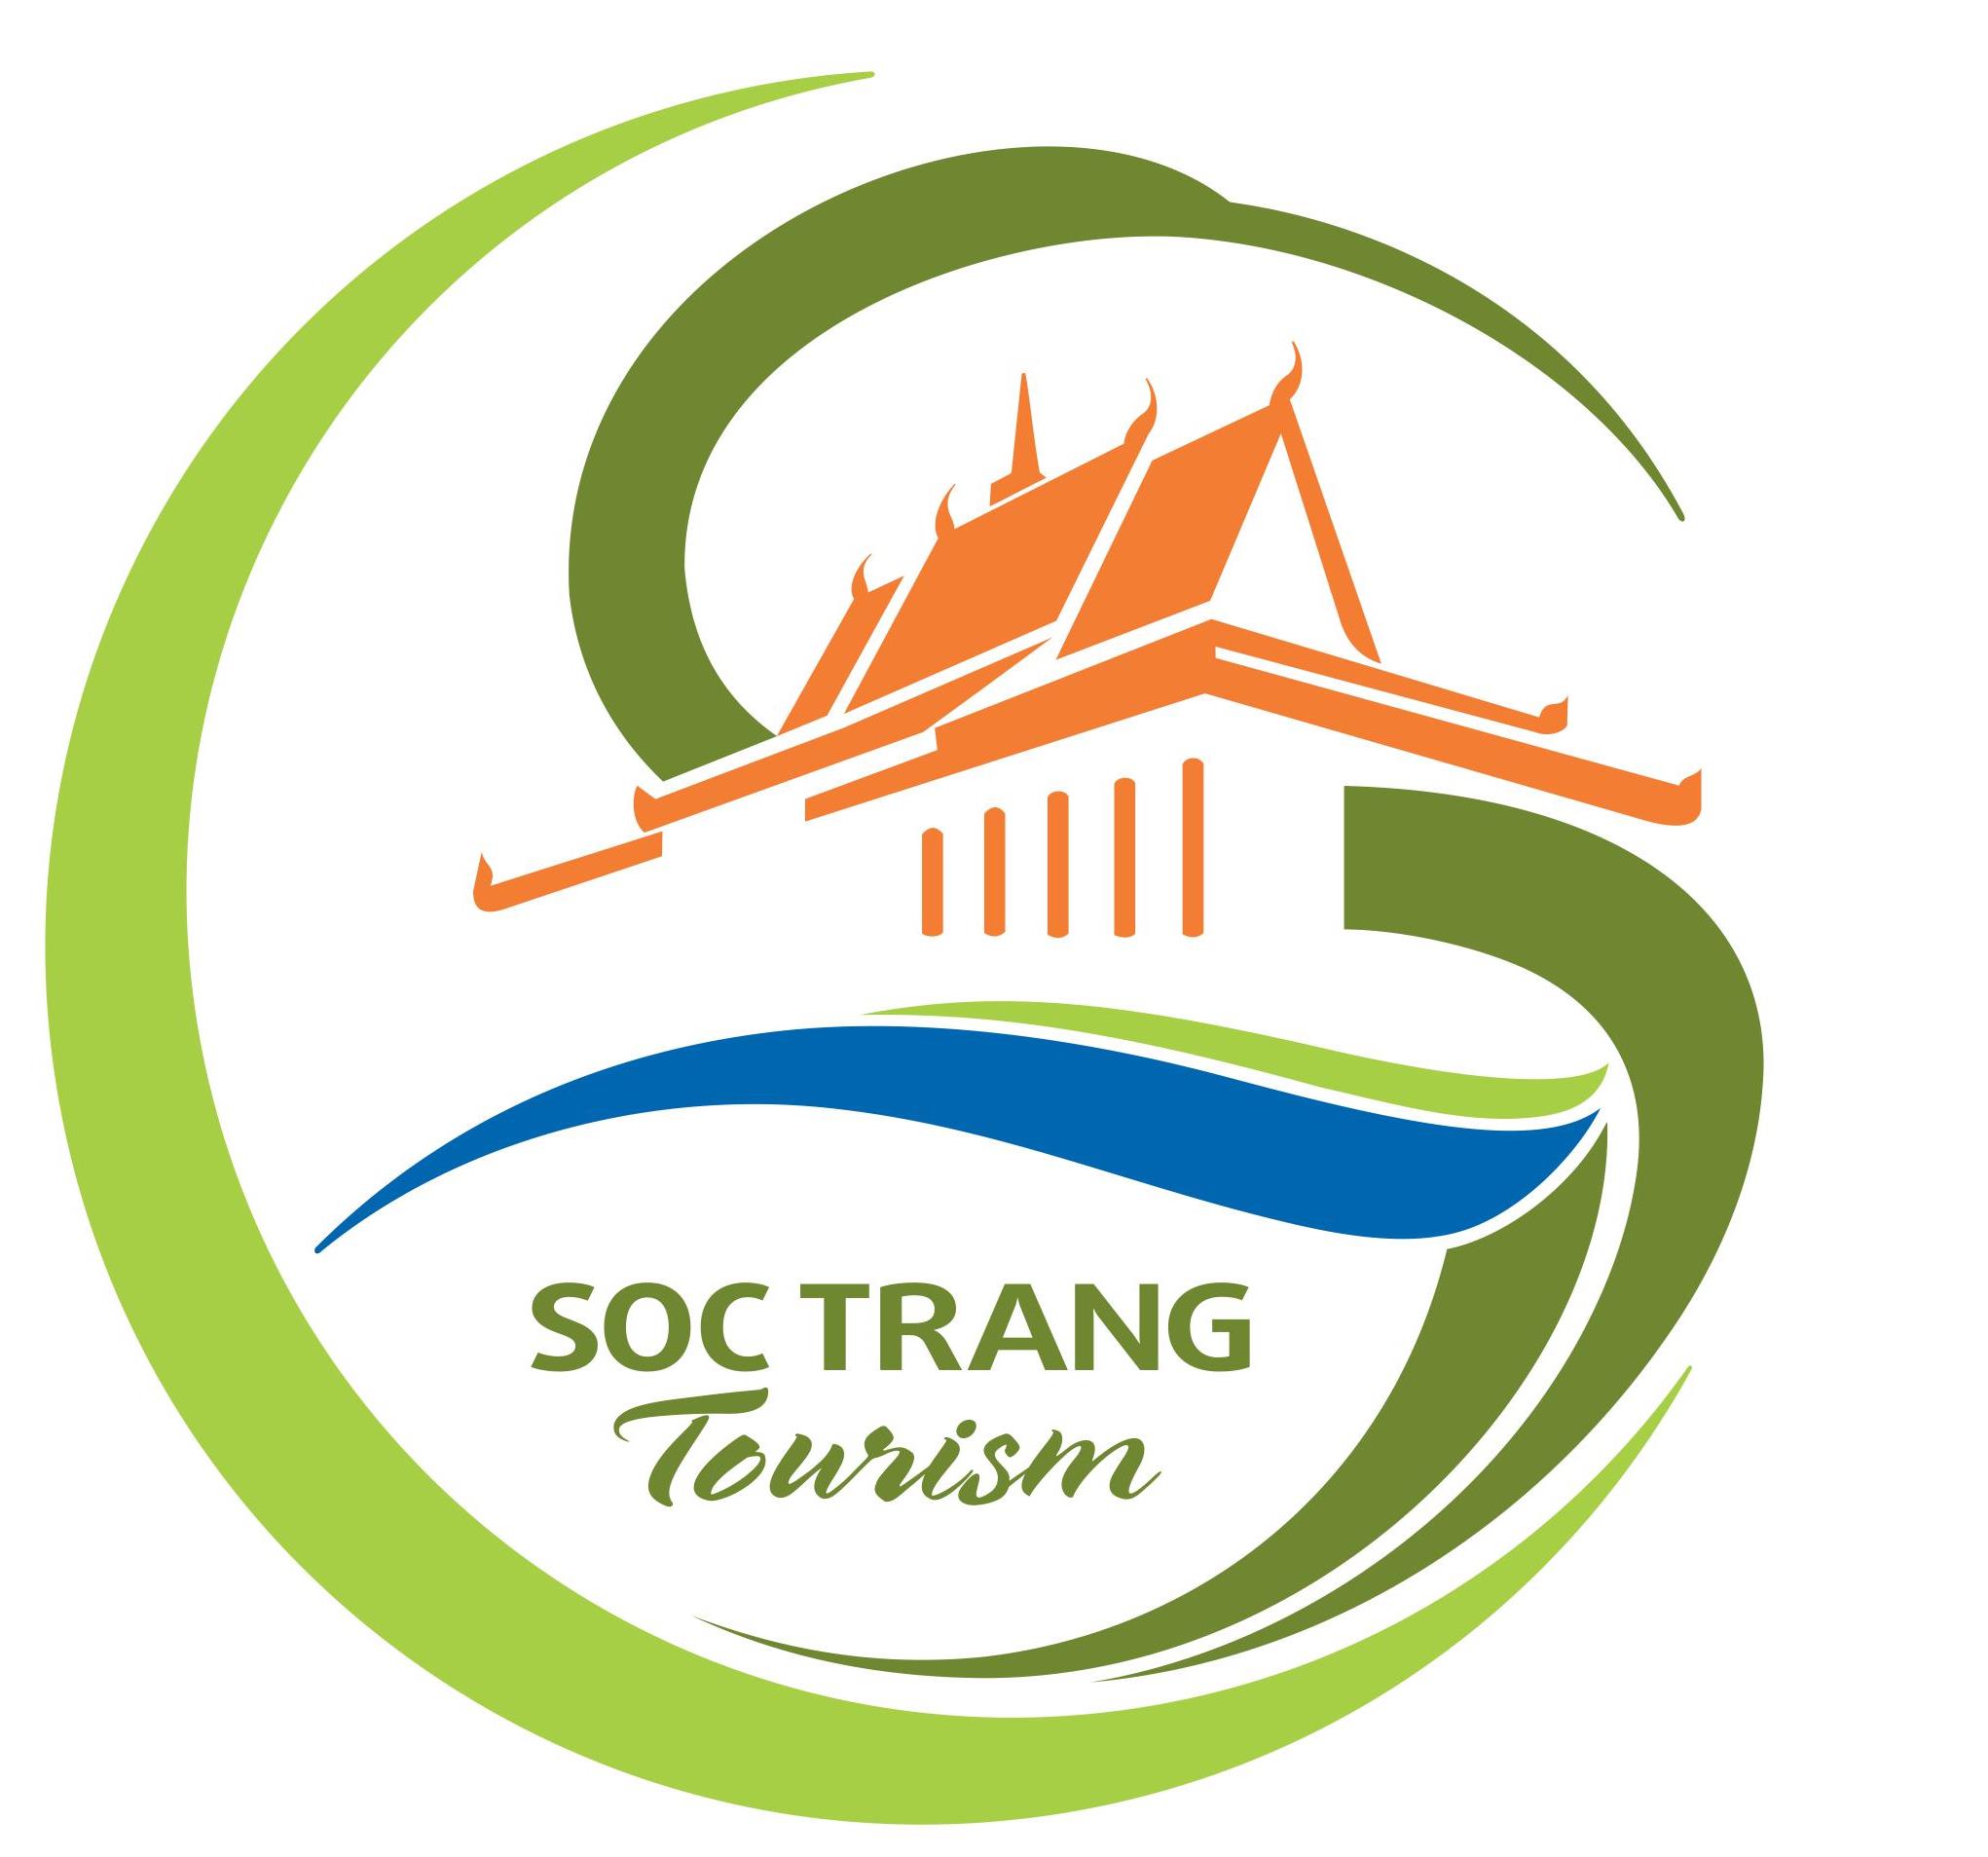 Soc Trang Tourism Information Promotion Center